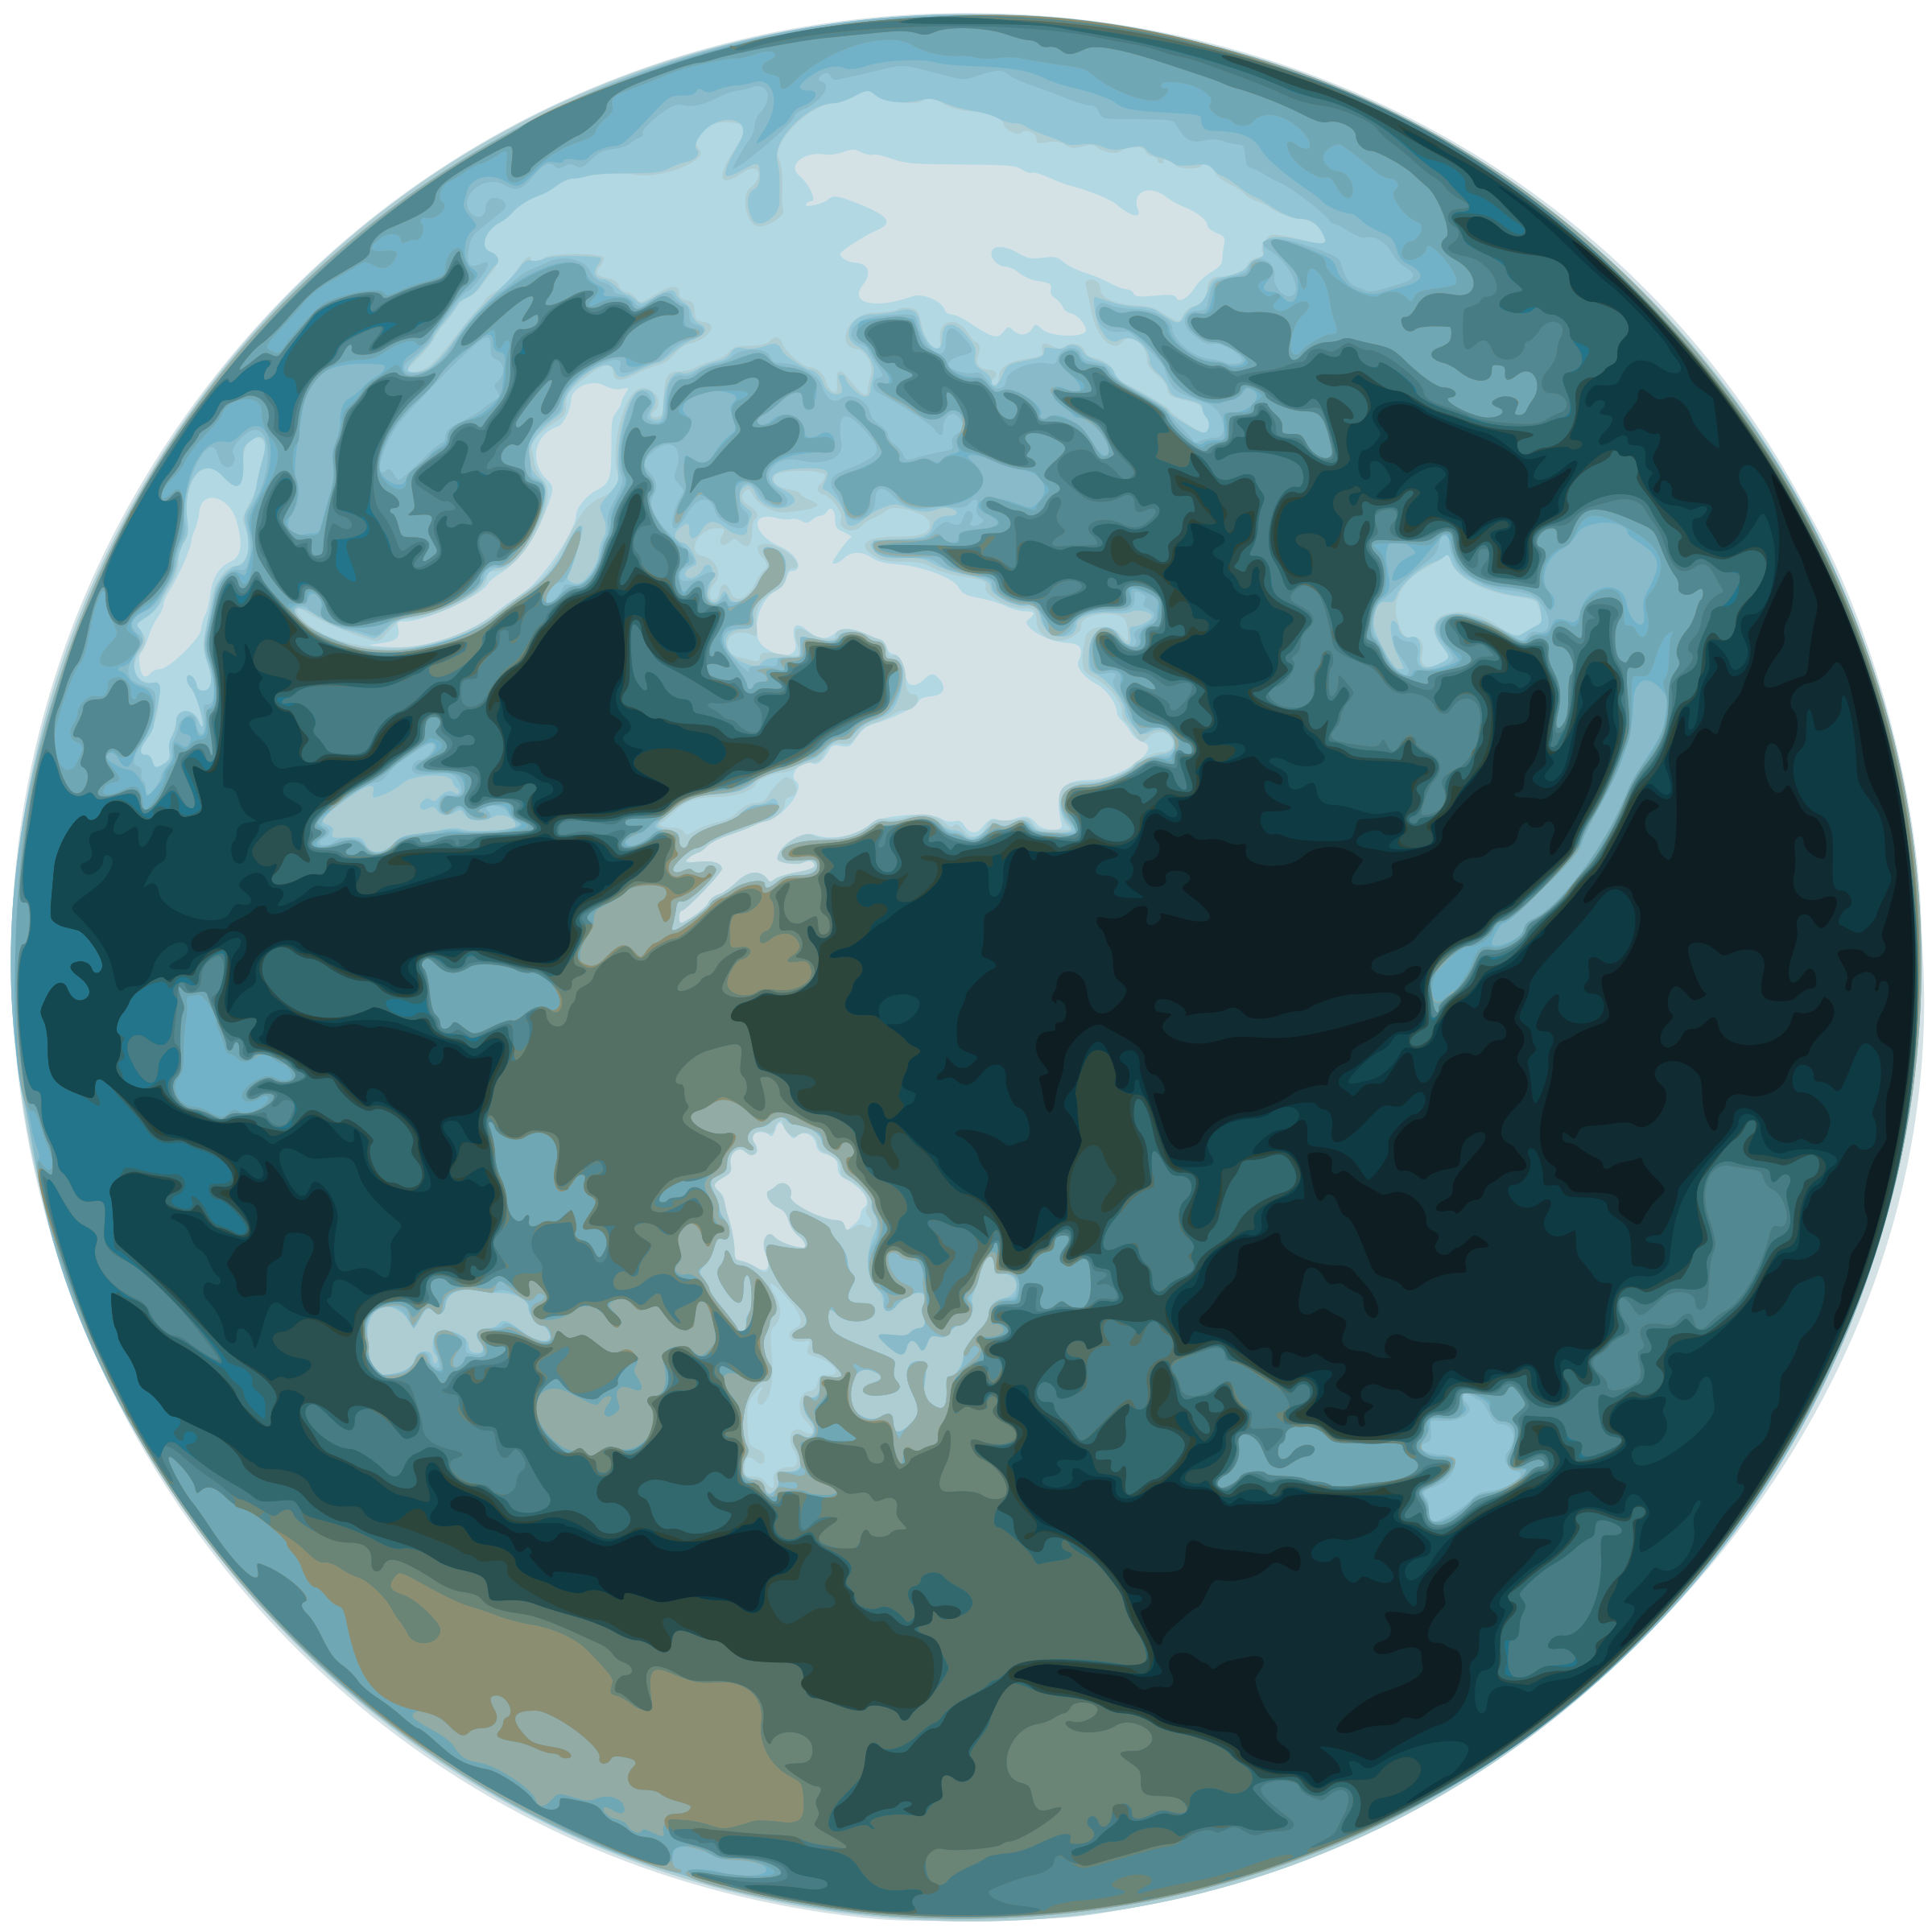 Earth Icon Vector Art image - Free stock photo - Public Domain photo - CC0  Images